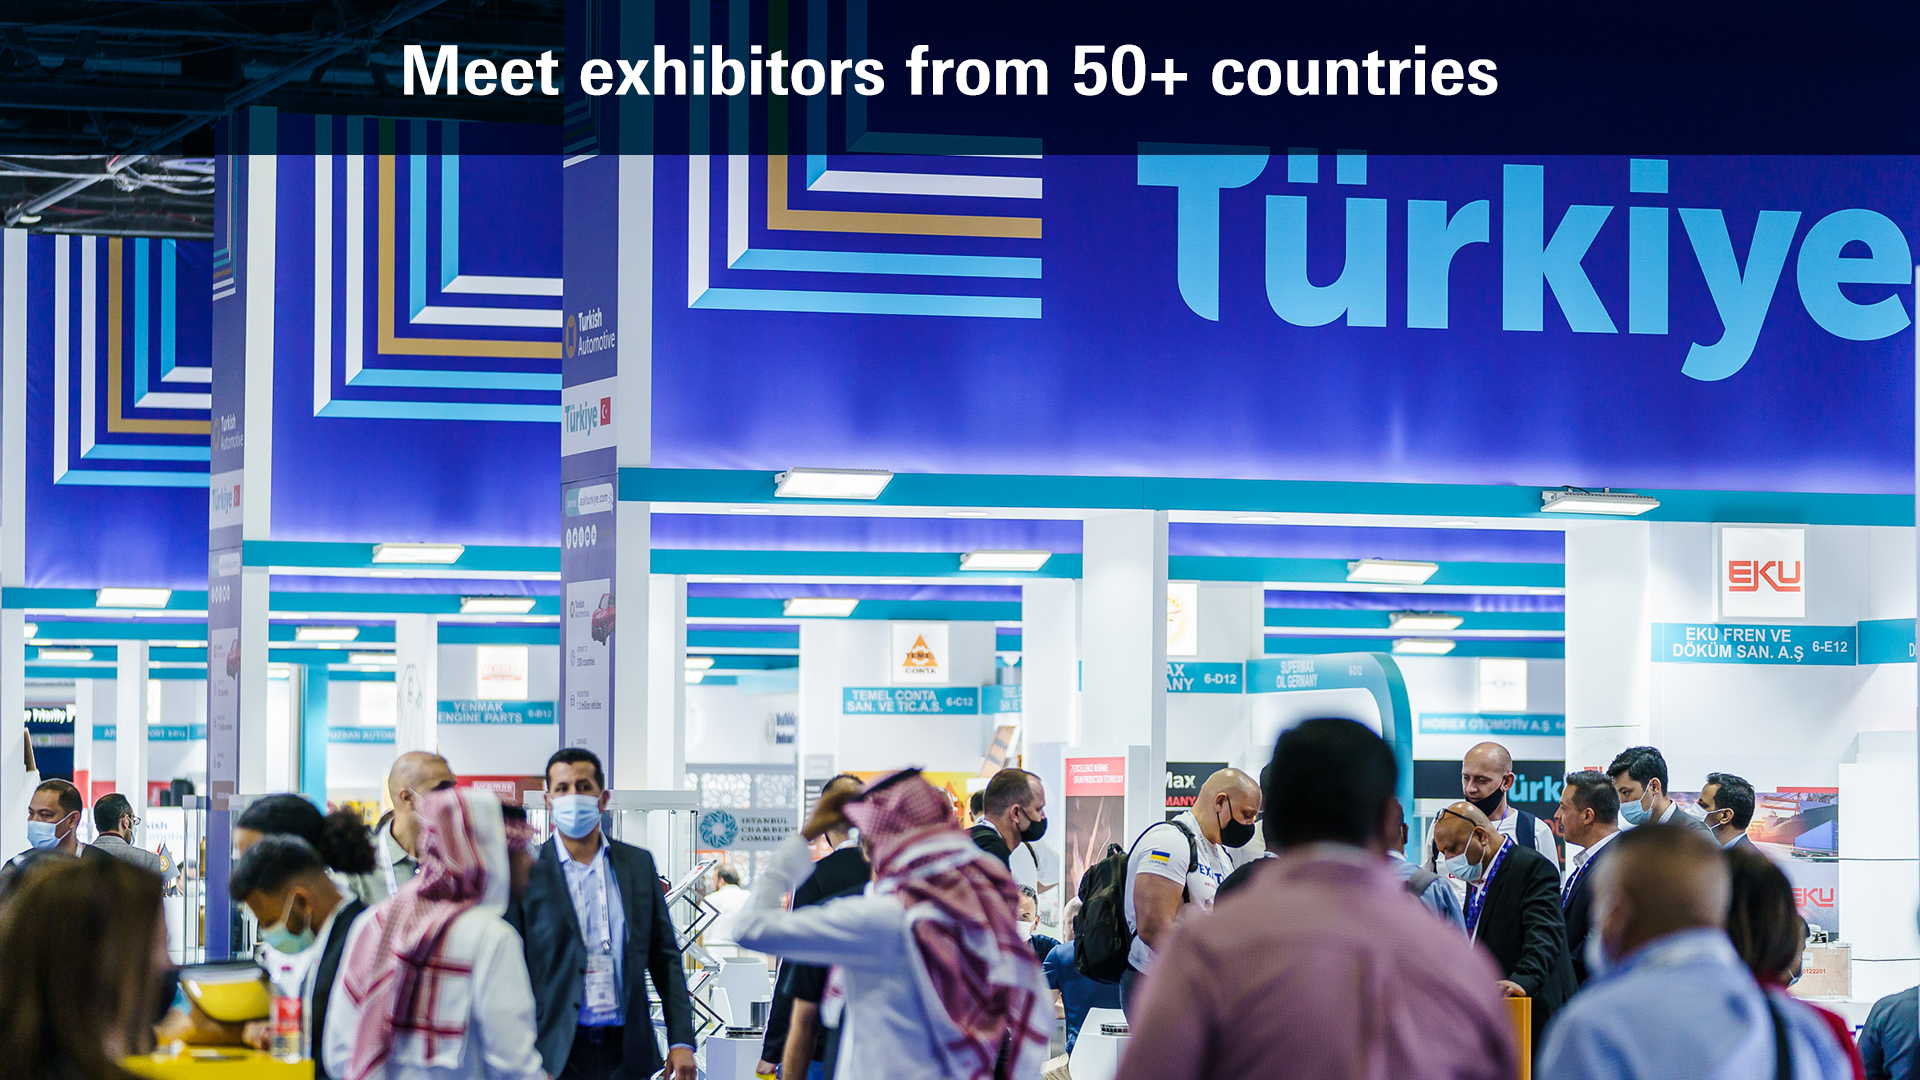 Automechanika Dubai - Meet exhibitors from 50+ countries